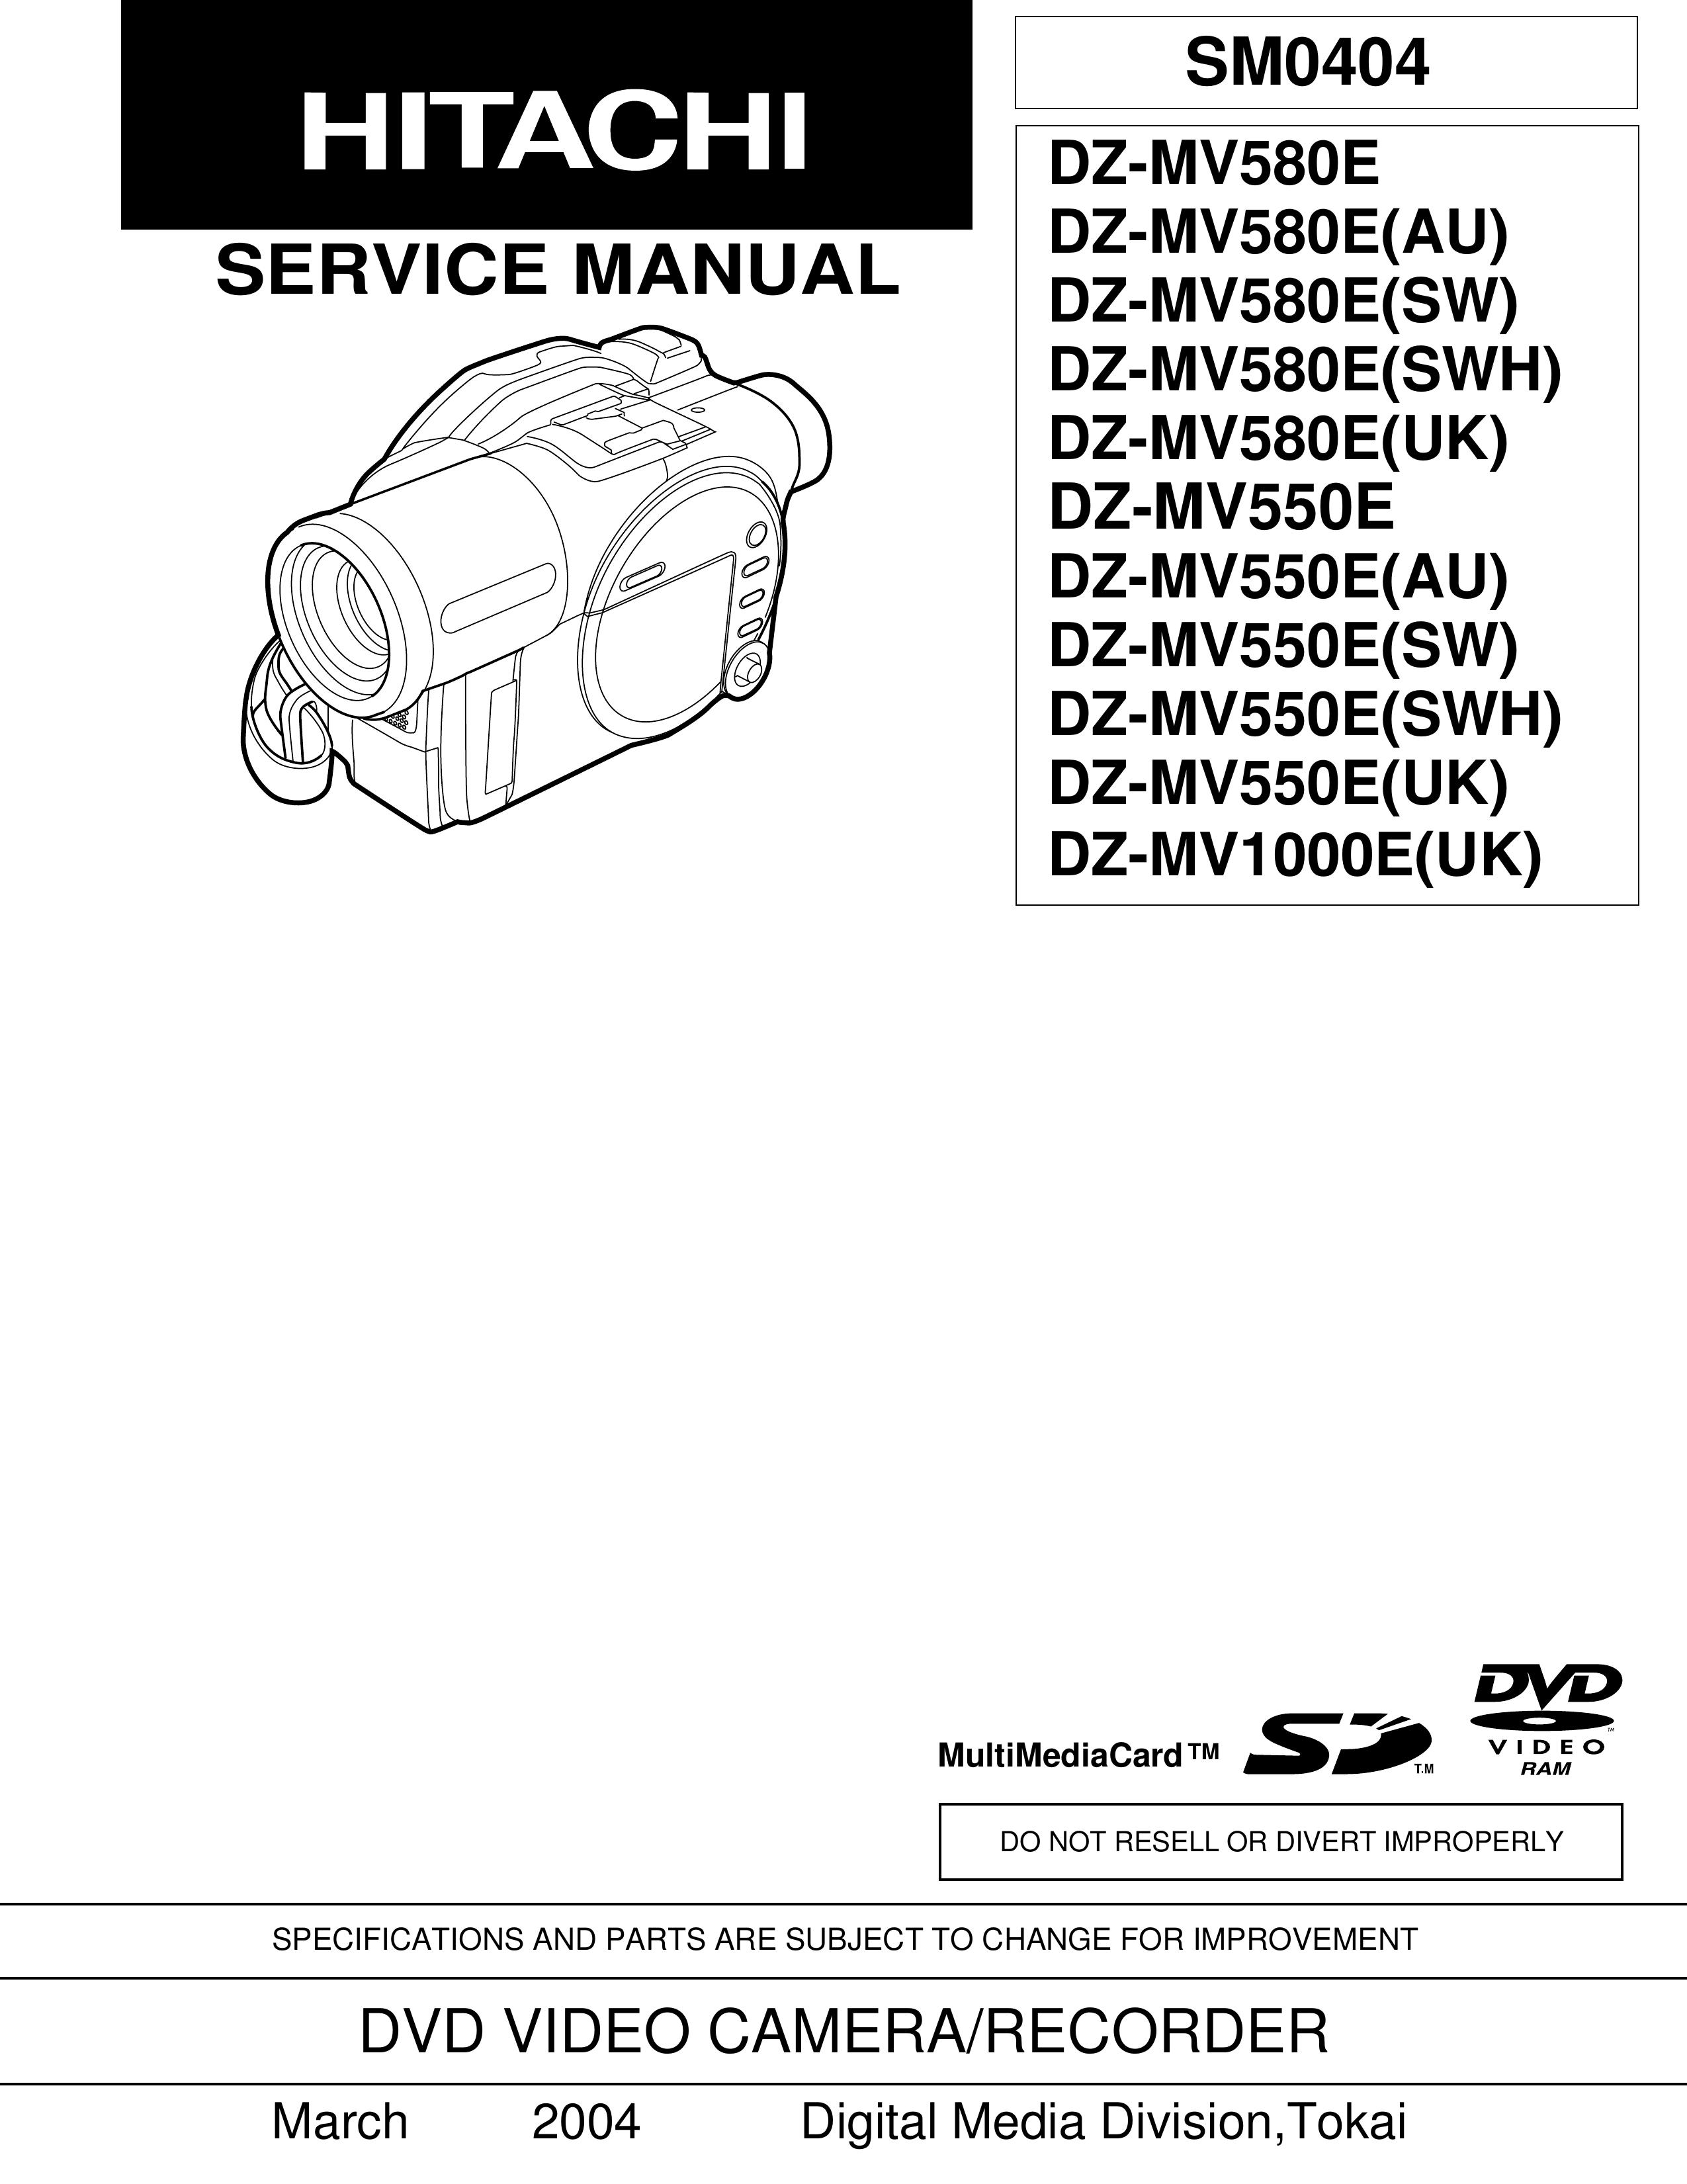 Hitachi DZ-MV580E DZ-MV580E(AU) DZ-MV580E(SW) DZ-MV580E(SWH) DZ-MV580E(UK) DZ-MV550E DZ-MV550E(AU) DZ-MV550E(SW) DZ-MV550E(SWH) DZ-MV550E(UK) Camcorder User Manual